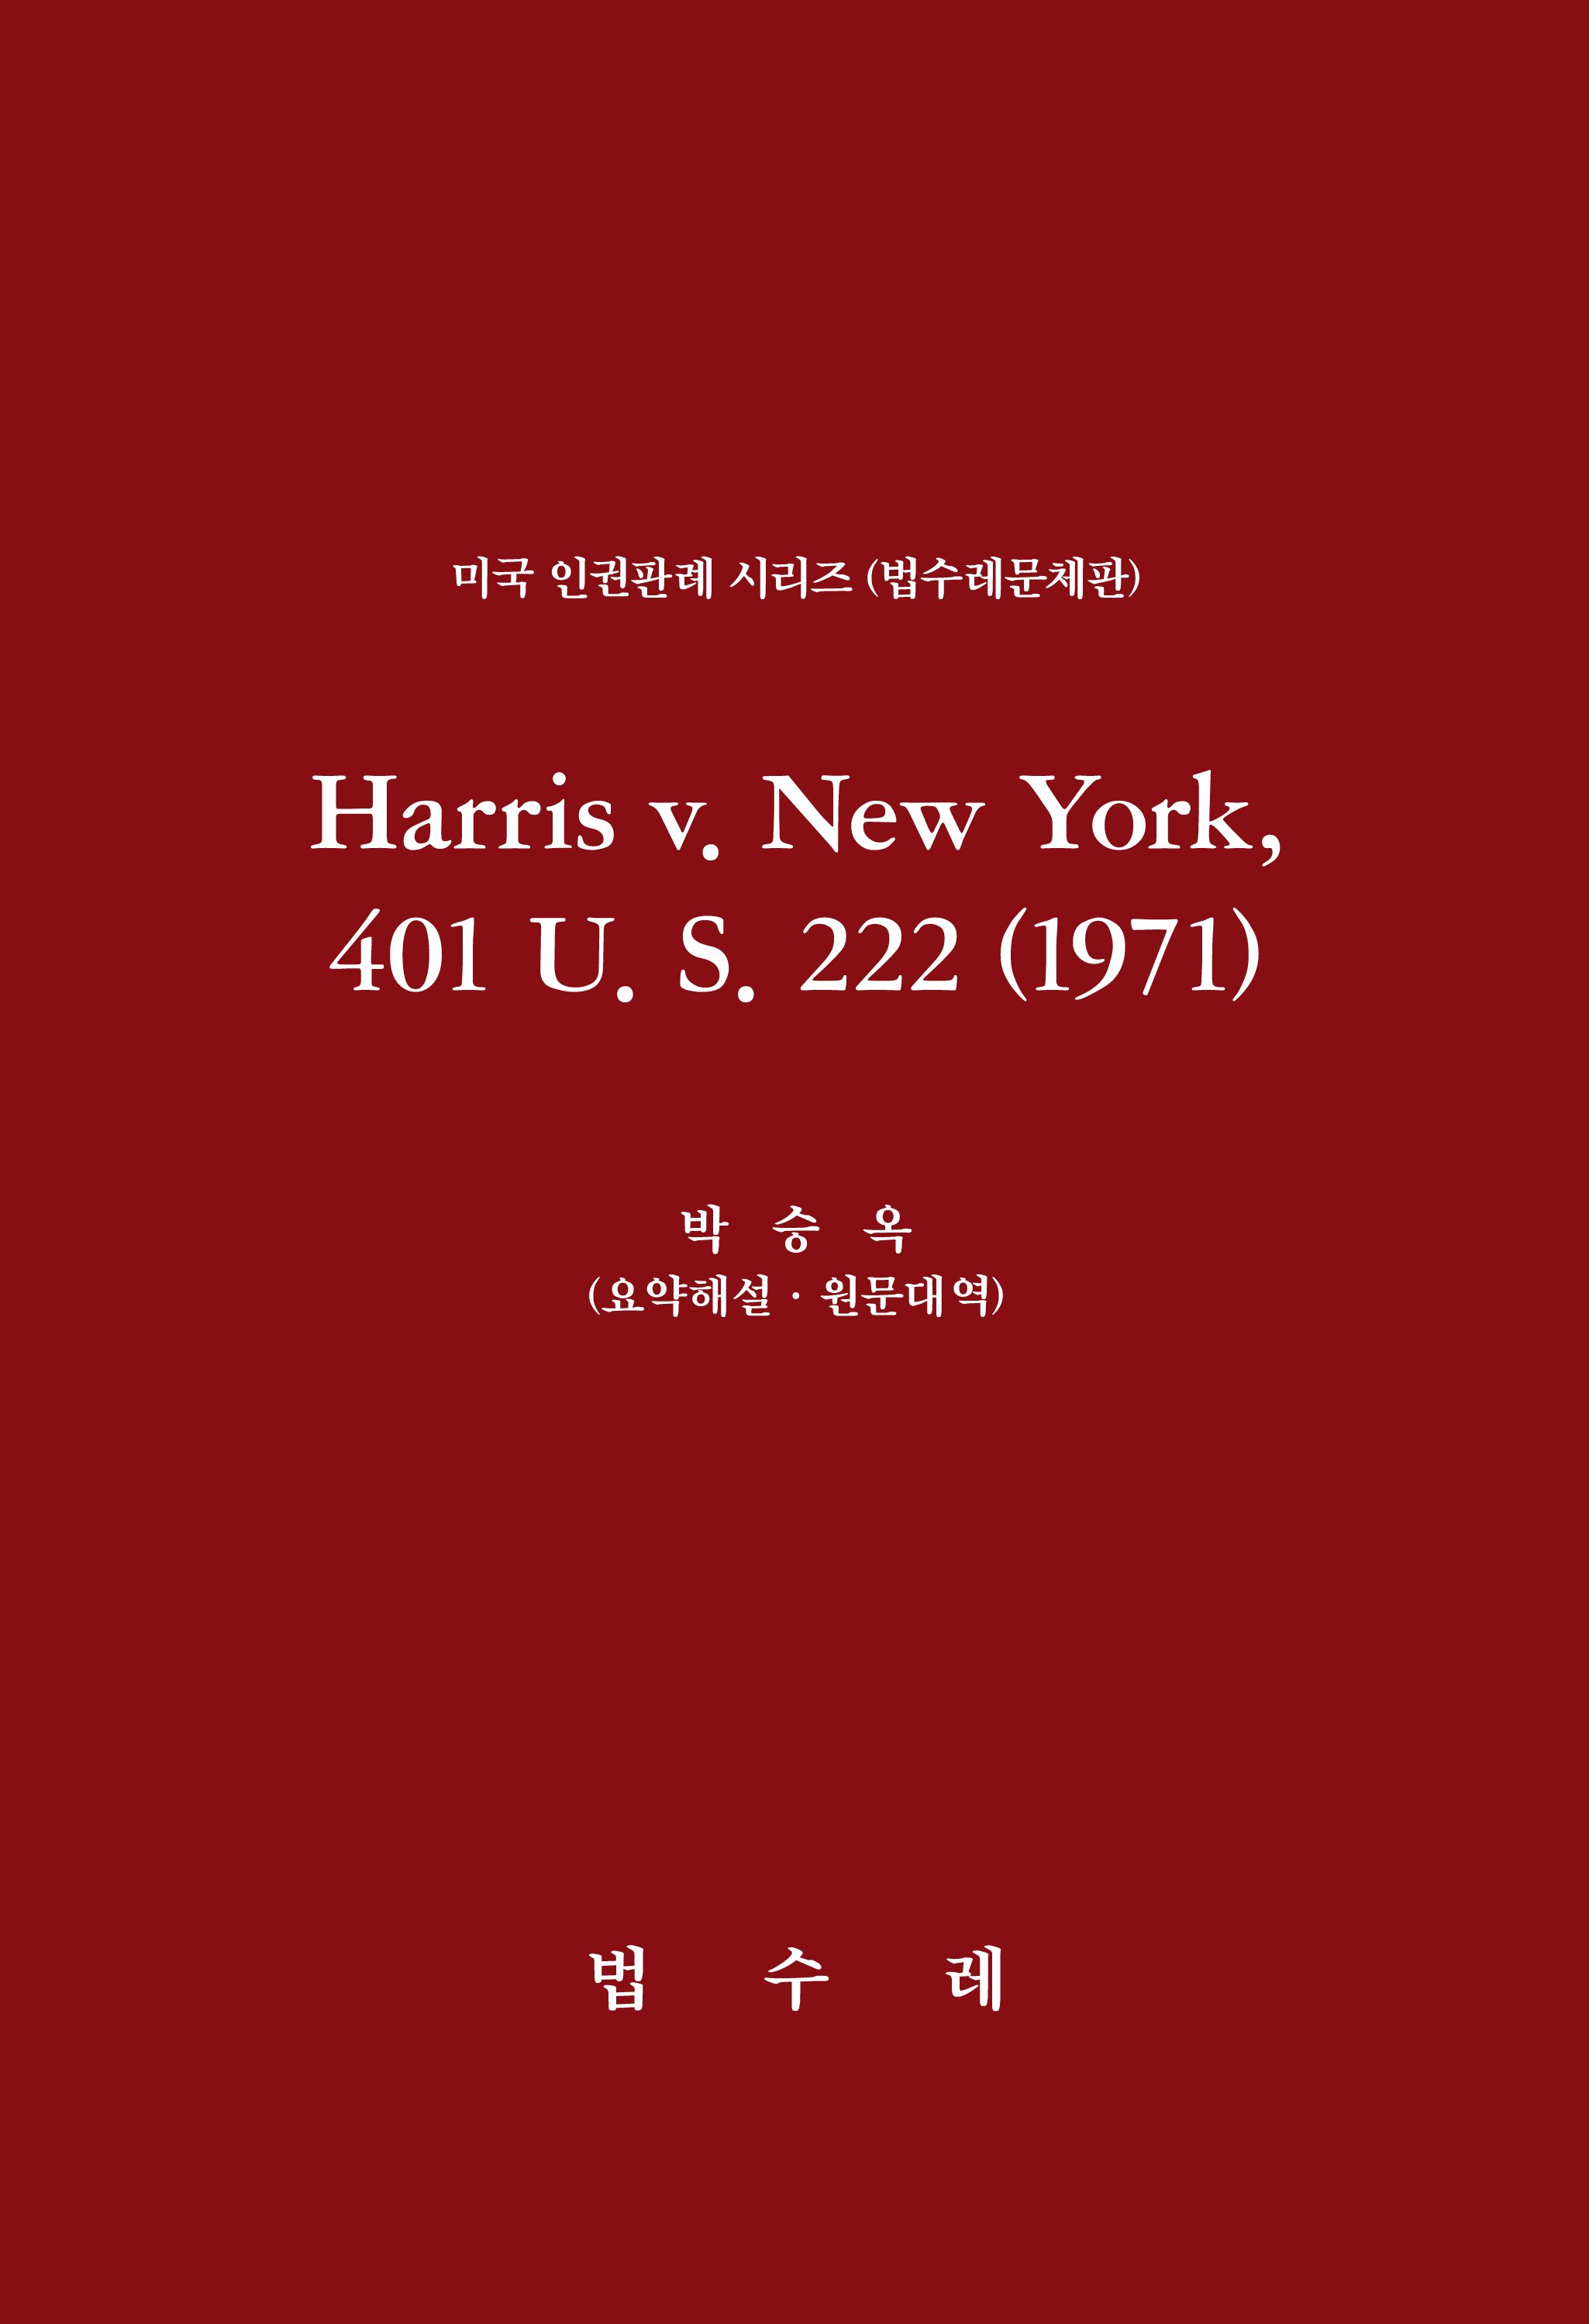 Harris v. New York, 401 U. S. 222 (1971)